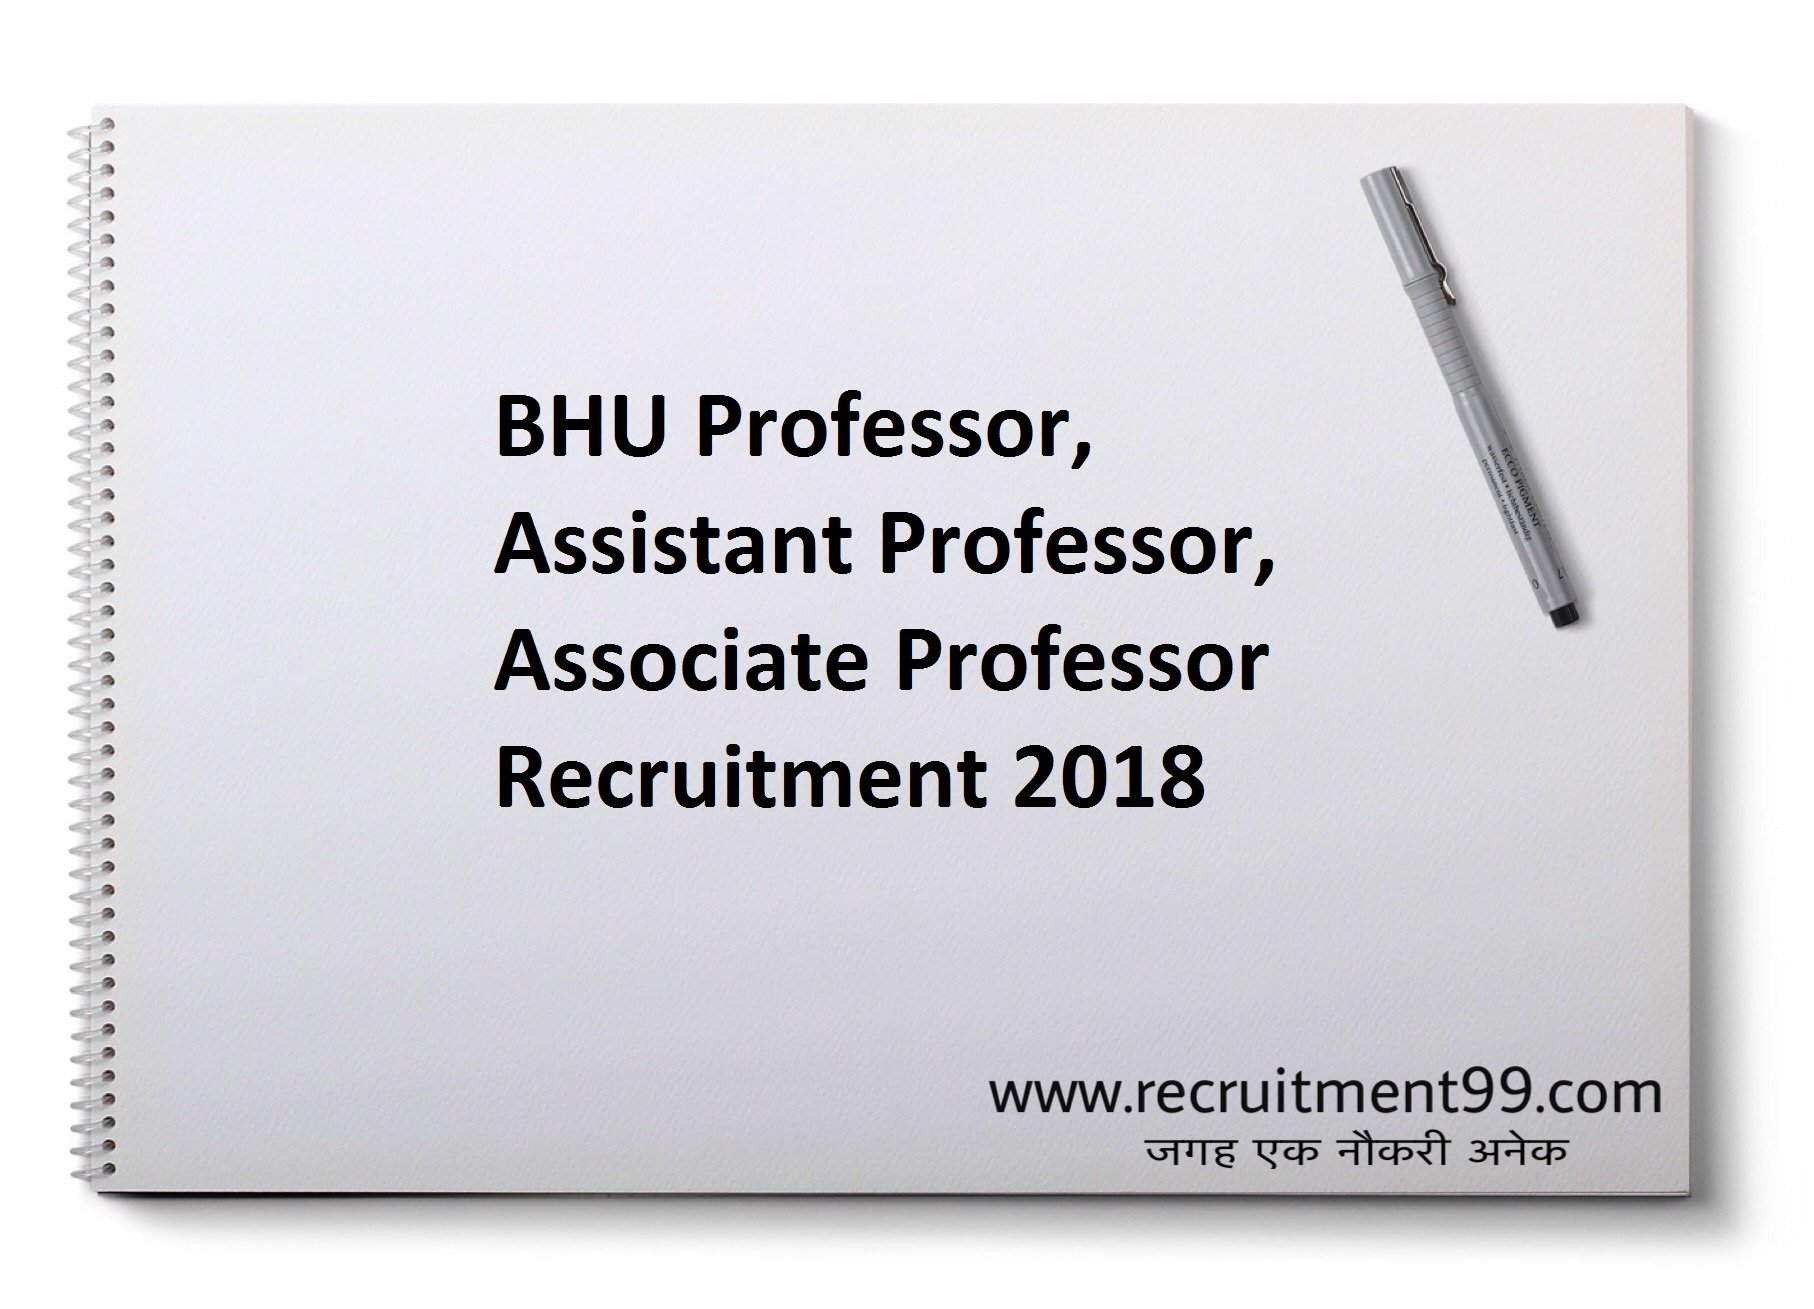  BHU Professor, Assistant Professor, Associate Professor Recruitment Admit Card Result 2018